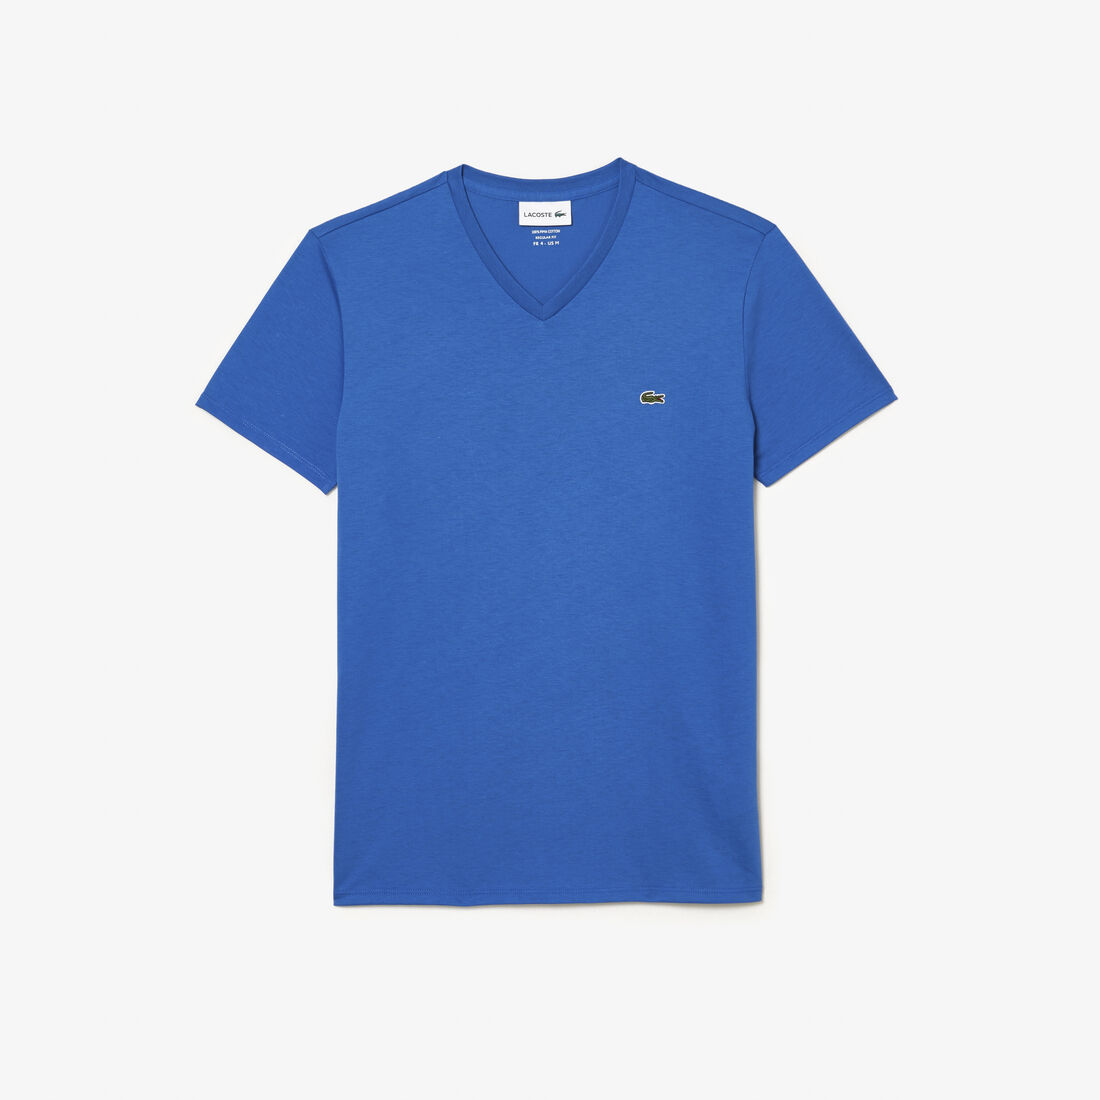 Lacoste - Pima Cotton Jersey T-Shirt, V-Neck - Blue